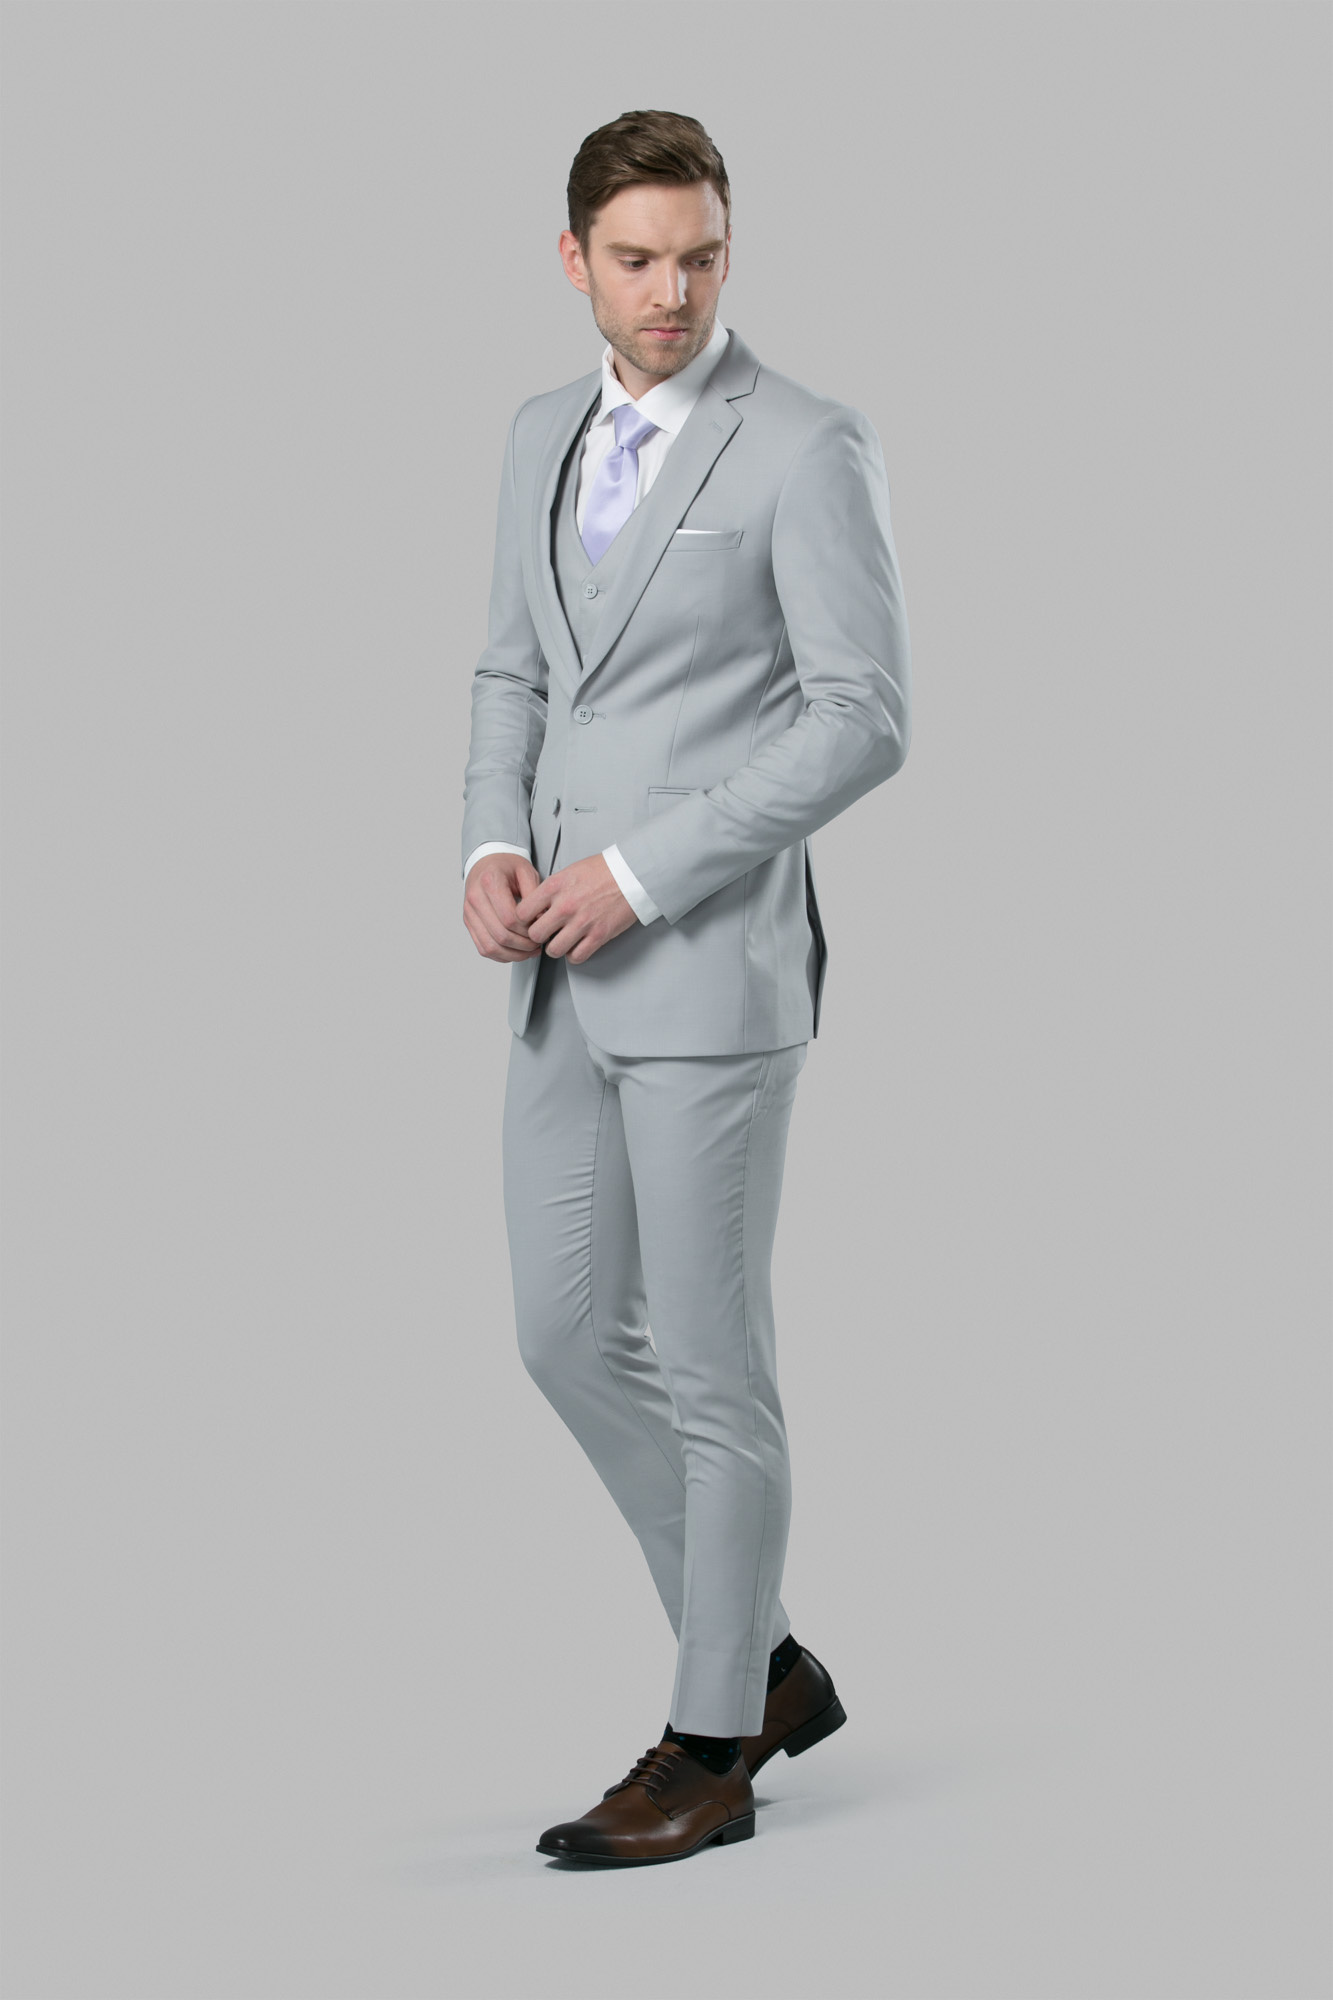 What Color Shoes With Light Grey Suit | Chose The Right Combination – Flex  Suits